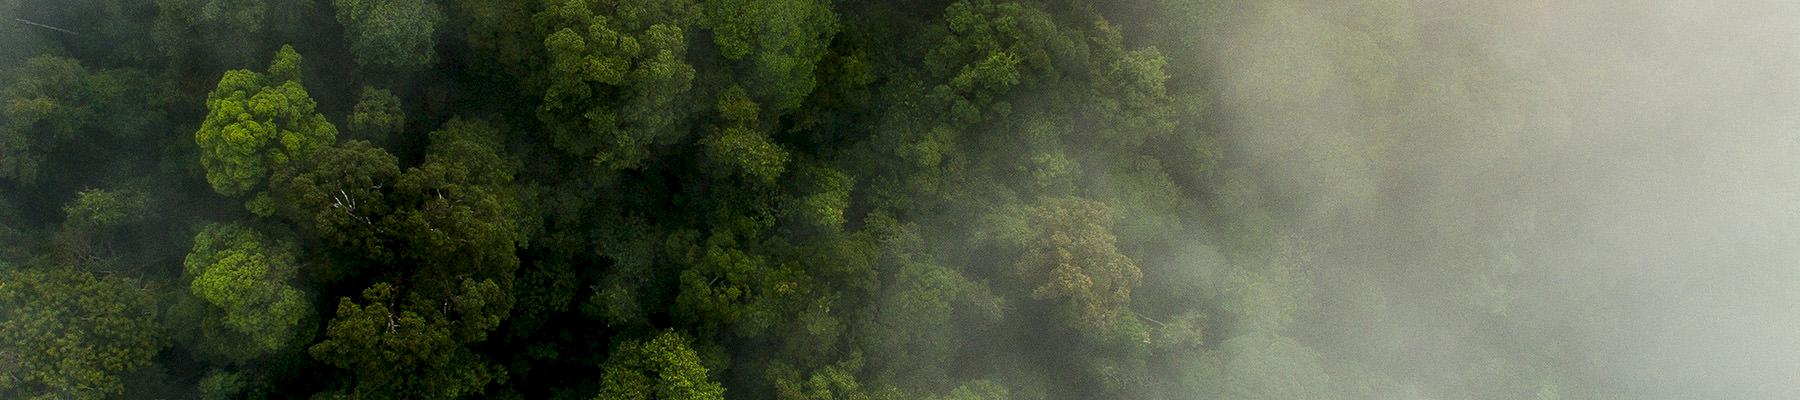 Aerial view of rainforest in Sumutra, Indonesia © Neil Ever Osborne / WWF-US